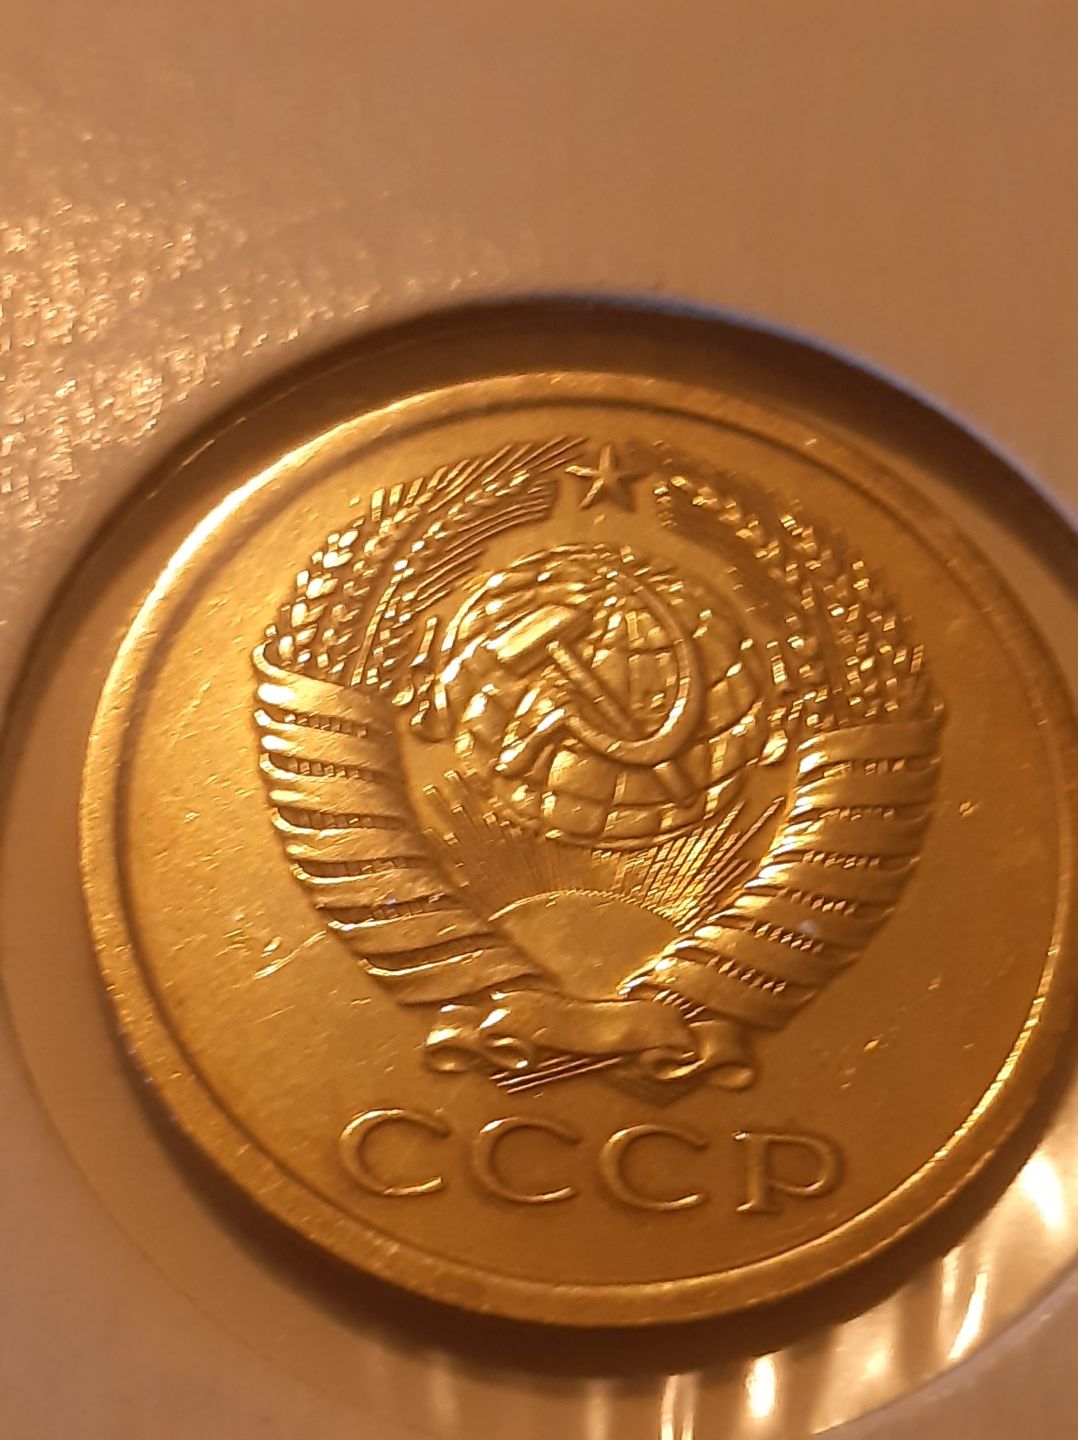 Монета 5 копеек 1979 года СССР